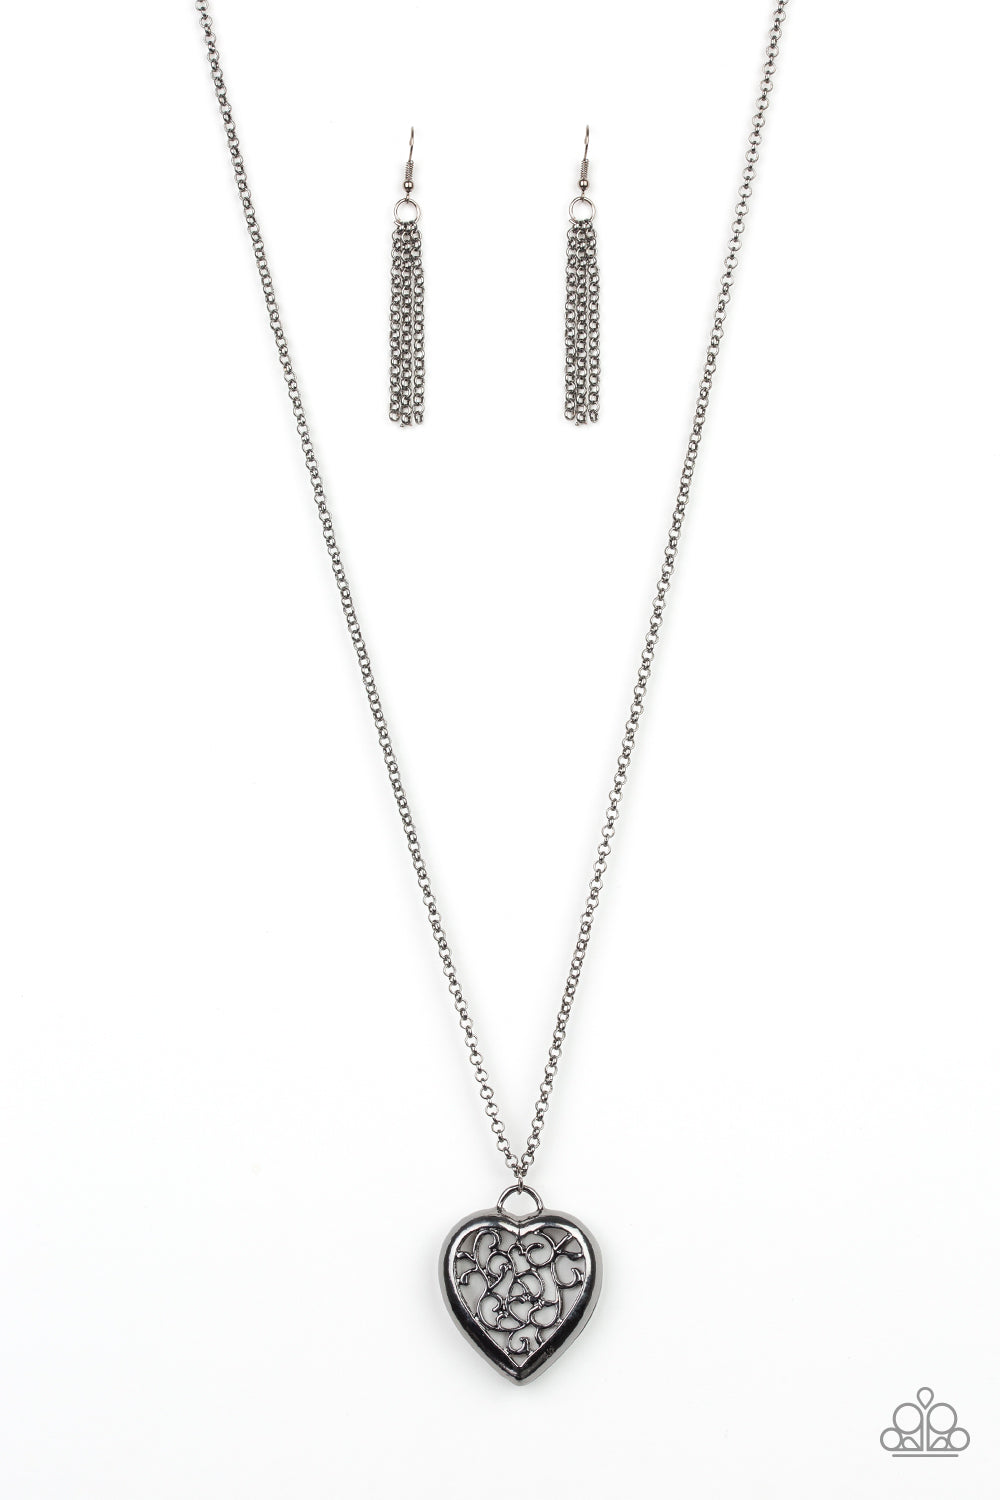 Victorian Valentine - Black Heart Necklace Set - Princess Glam Shop